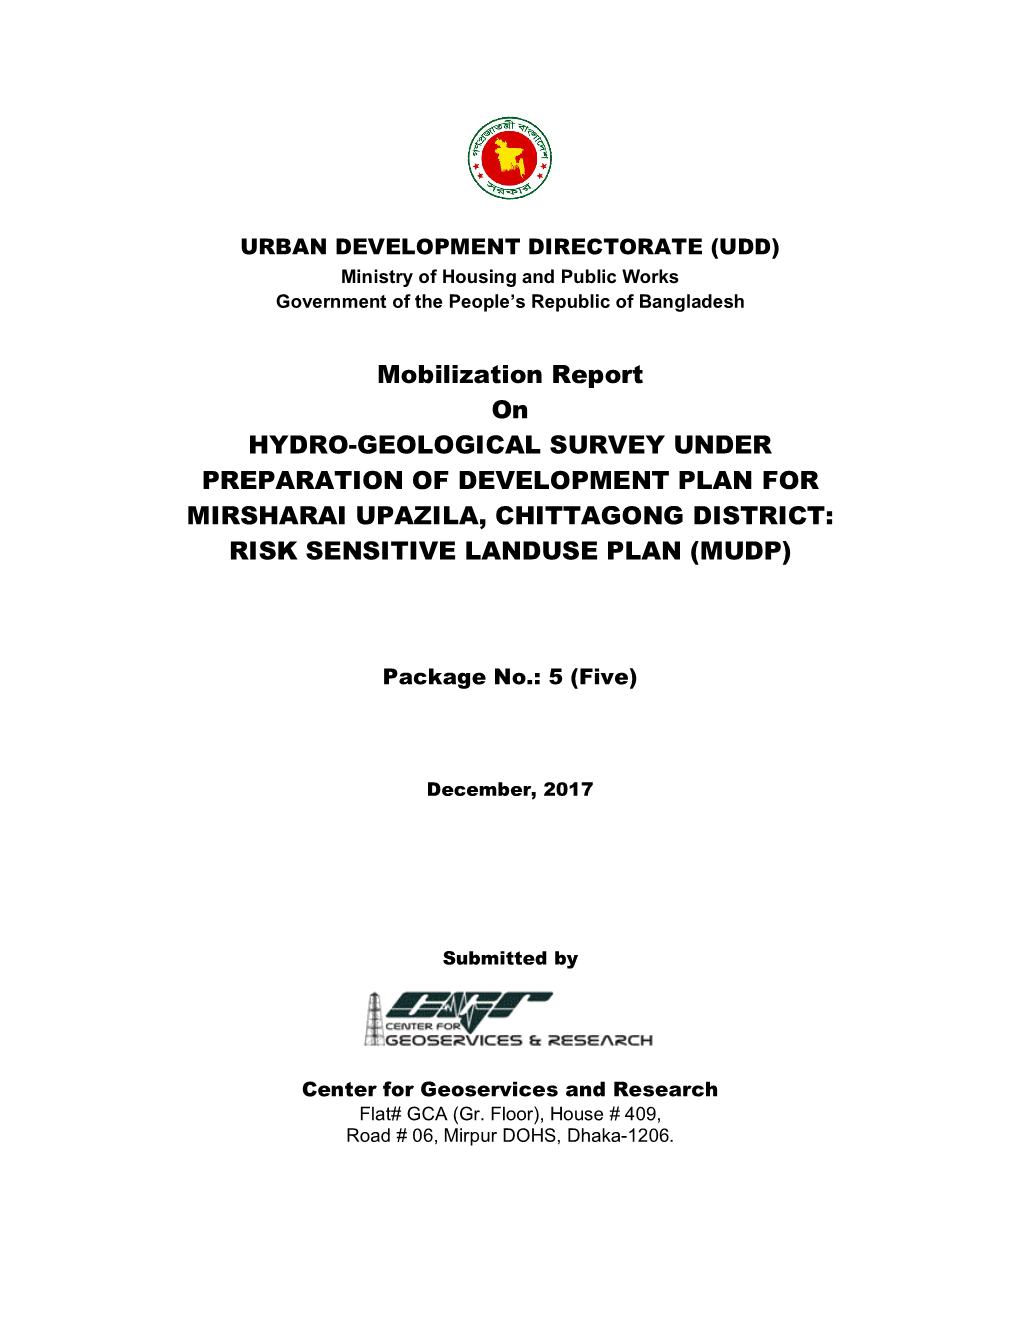 Mobilization Report on HYDRO-GEOLOGICAL SURVEY UNDER PREPARATION of DEVELOPMENT PLAN for MIRSHARAI UPAZILA, CHITTAGONG DISTRICT: RISK SENSITIVE LANDUSE PLAN (MUDP)